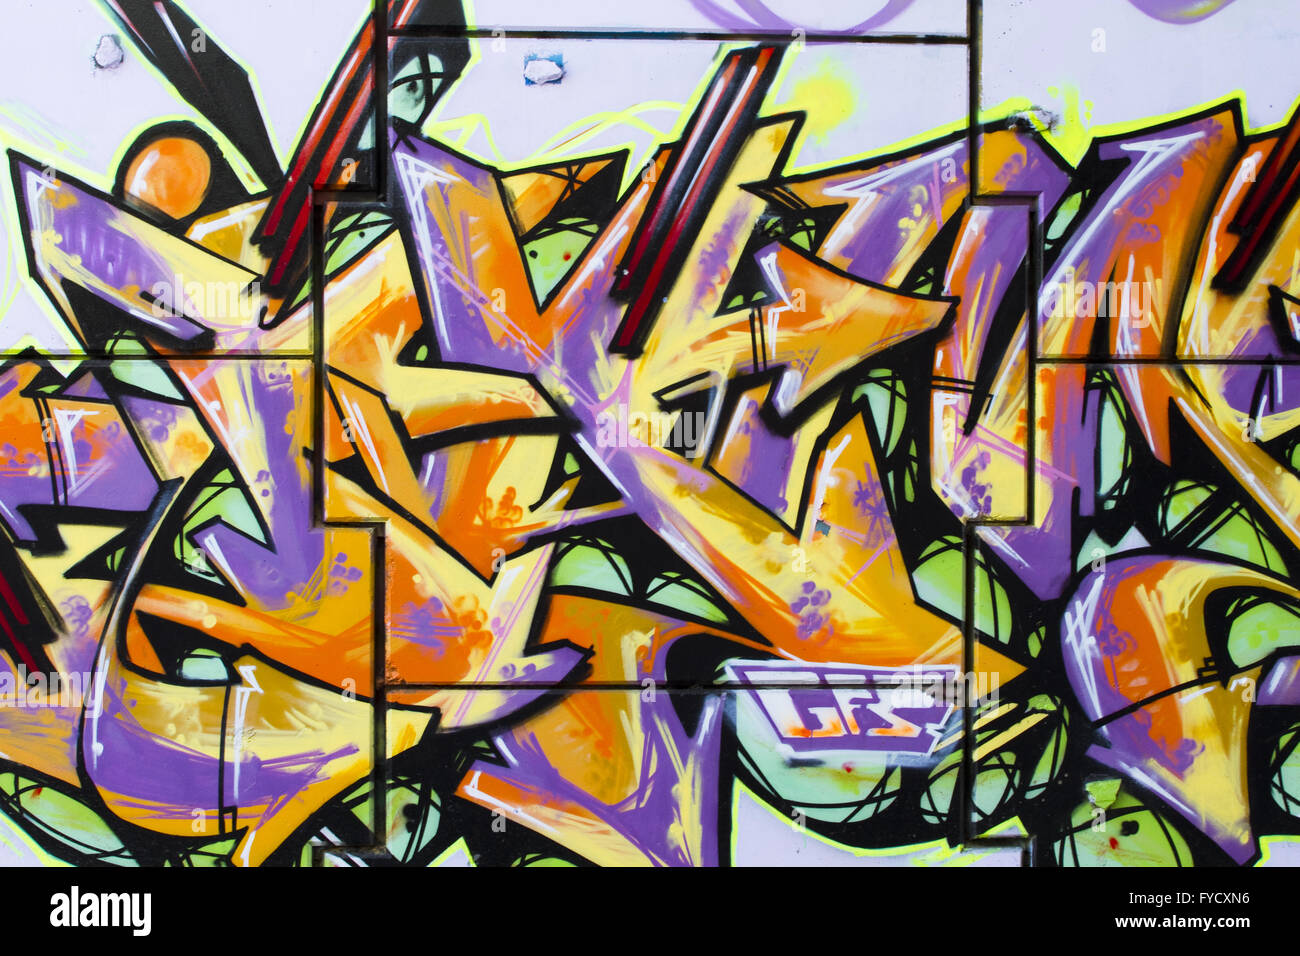 Street art, urban grafitti on wall Stock Photo